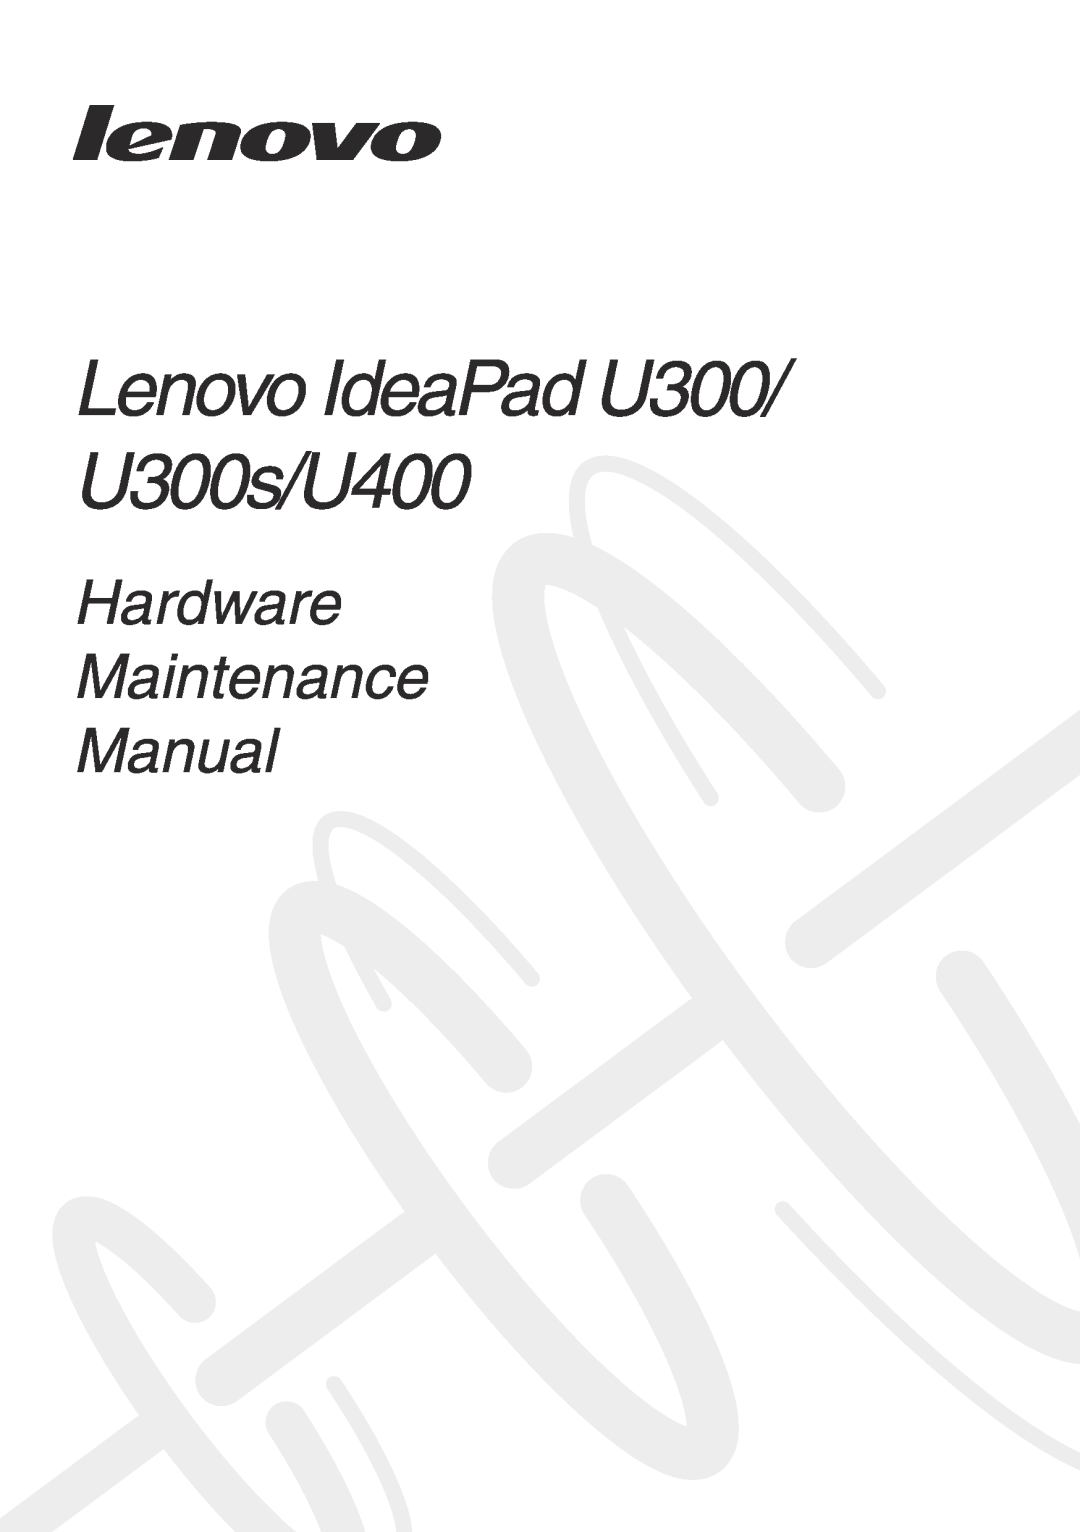 Lenovo U300S manual Lenovo IdeaPad U300/ U300s/U400, Hardware Maintenance Manual 